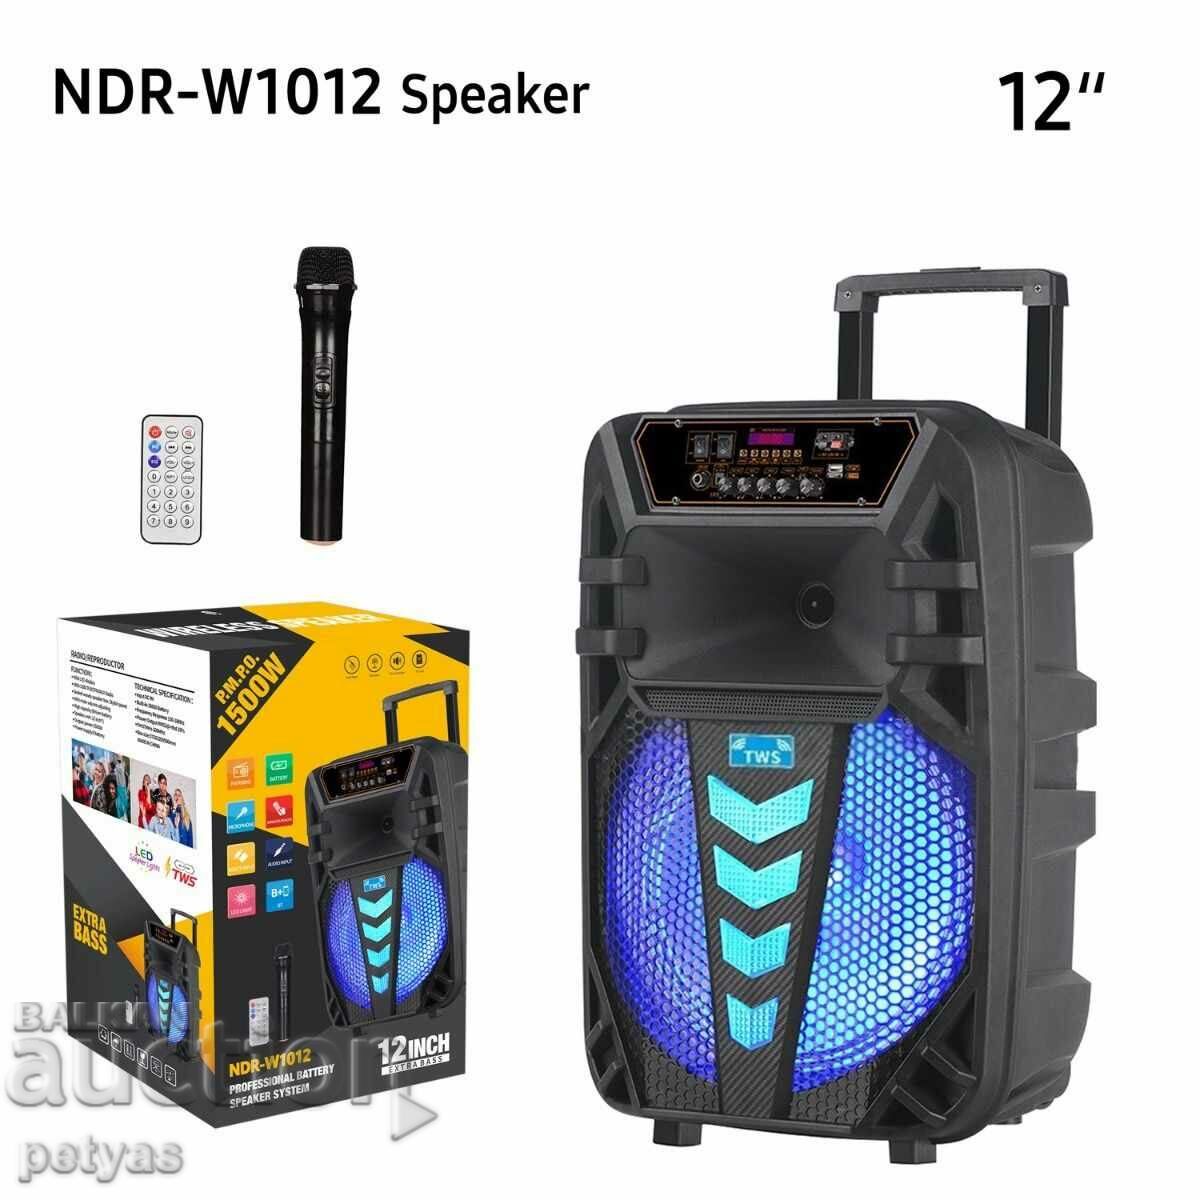 Karaoke speaker 12 inches NDR W1012 with wireless microphone